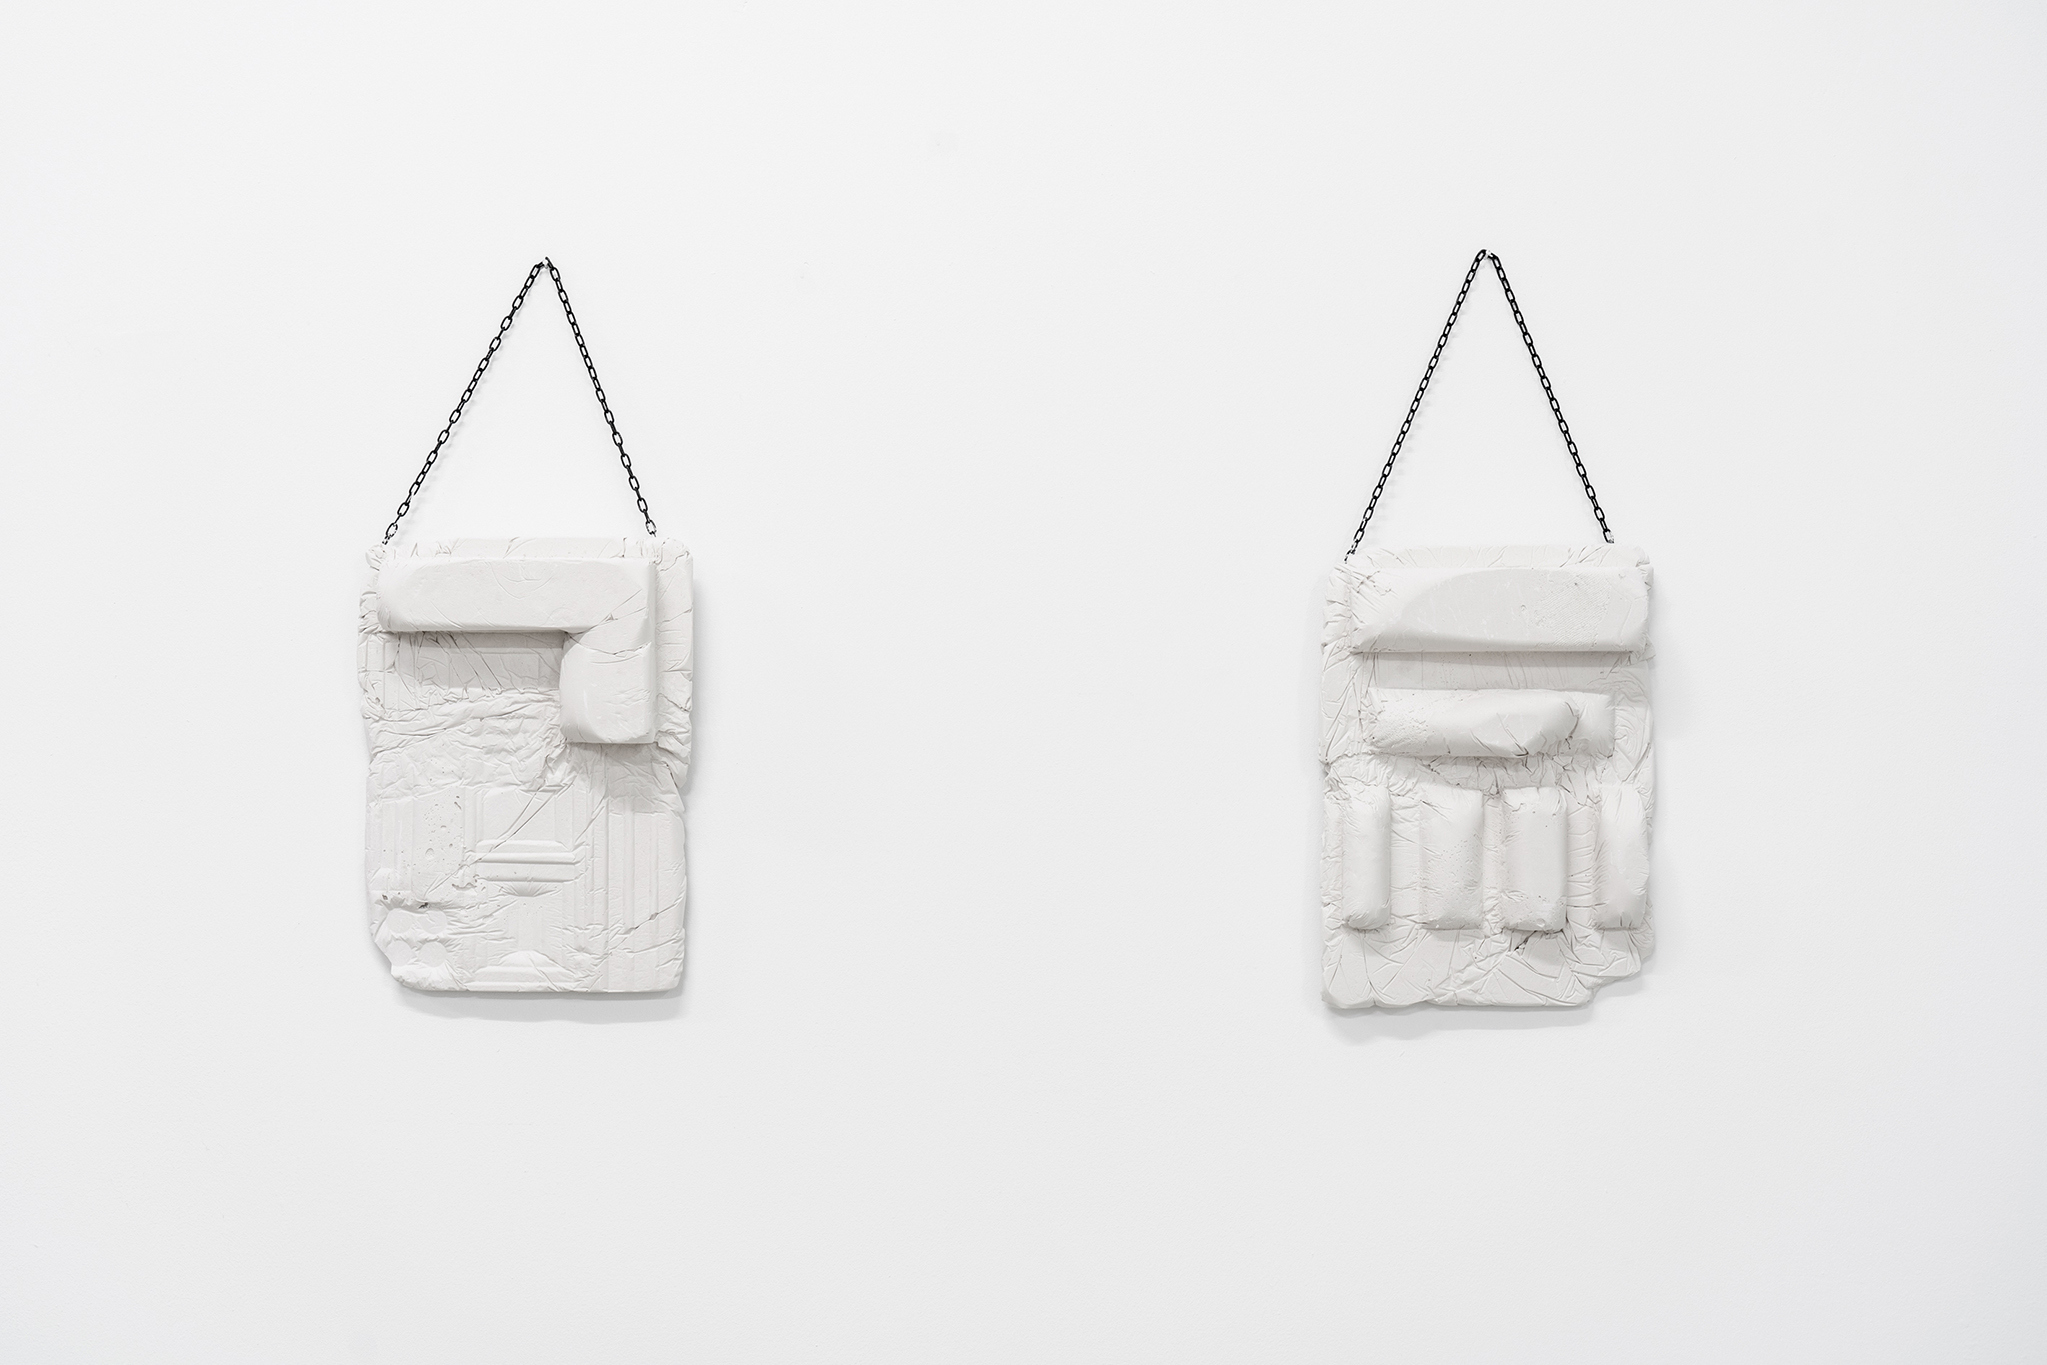 Anna Bochkova, „Algorithm of social housing N.4 and N.2“, plaster cast, gauze, metal chain, each 24x20x2 cm